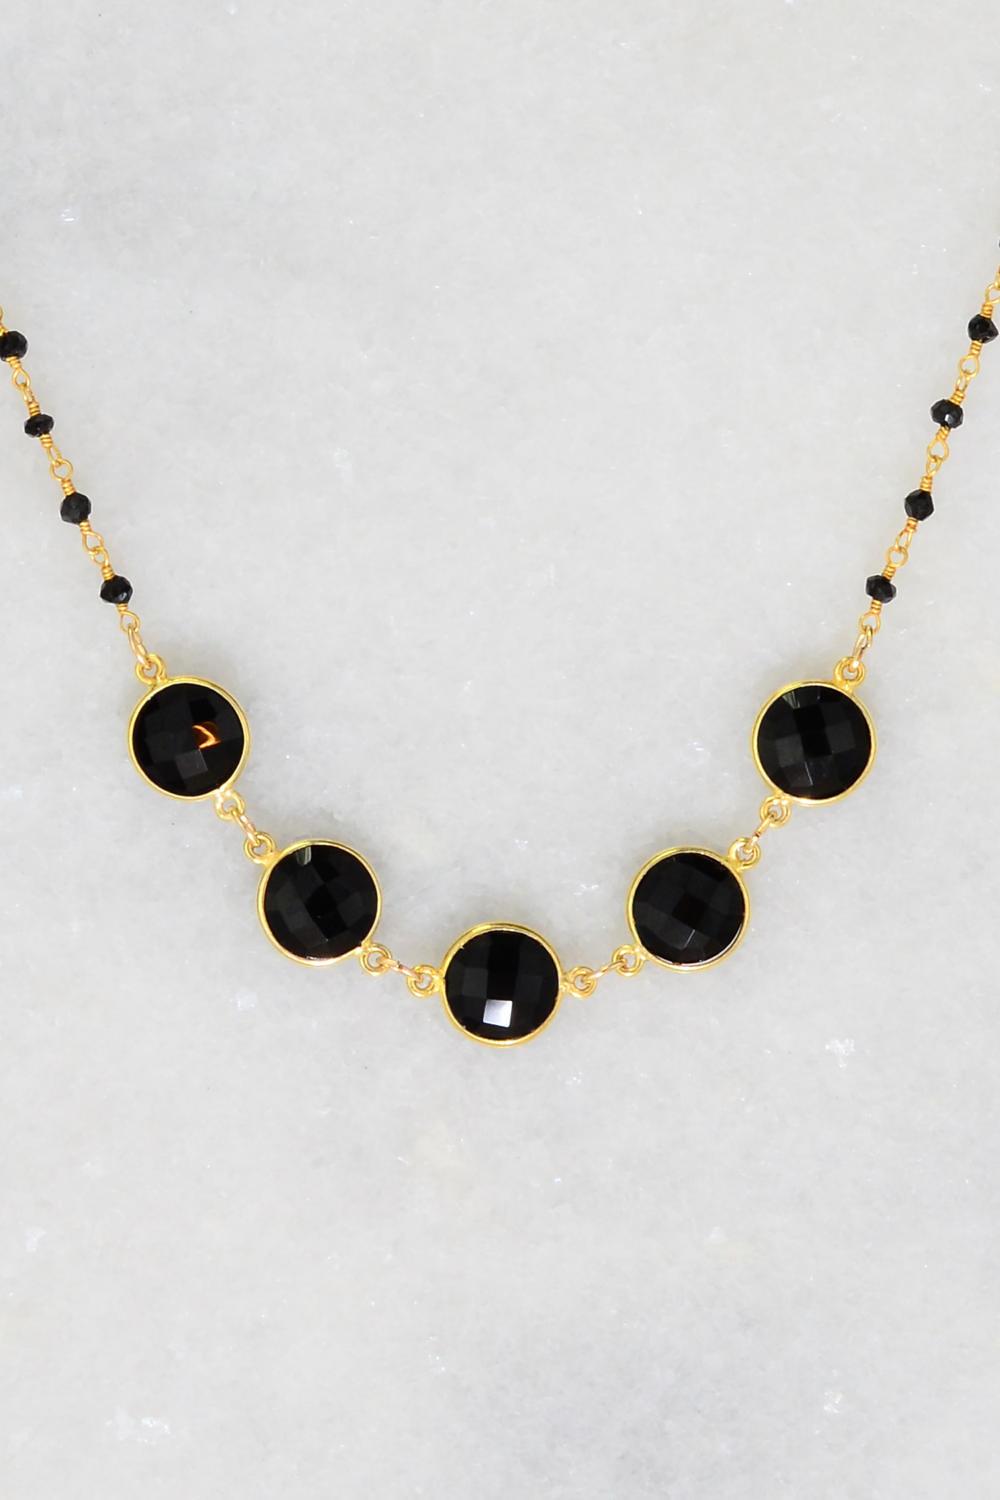 Black Onyx Necklace - Mothers Day Gift - July Birthstone - Mom Necklace - Statement Necklace - Handmade Necklace - Black Necklace